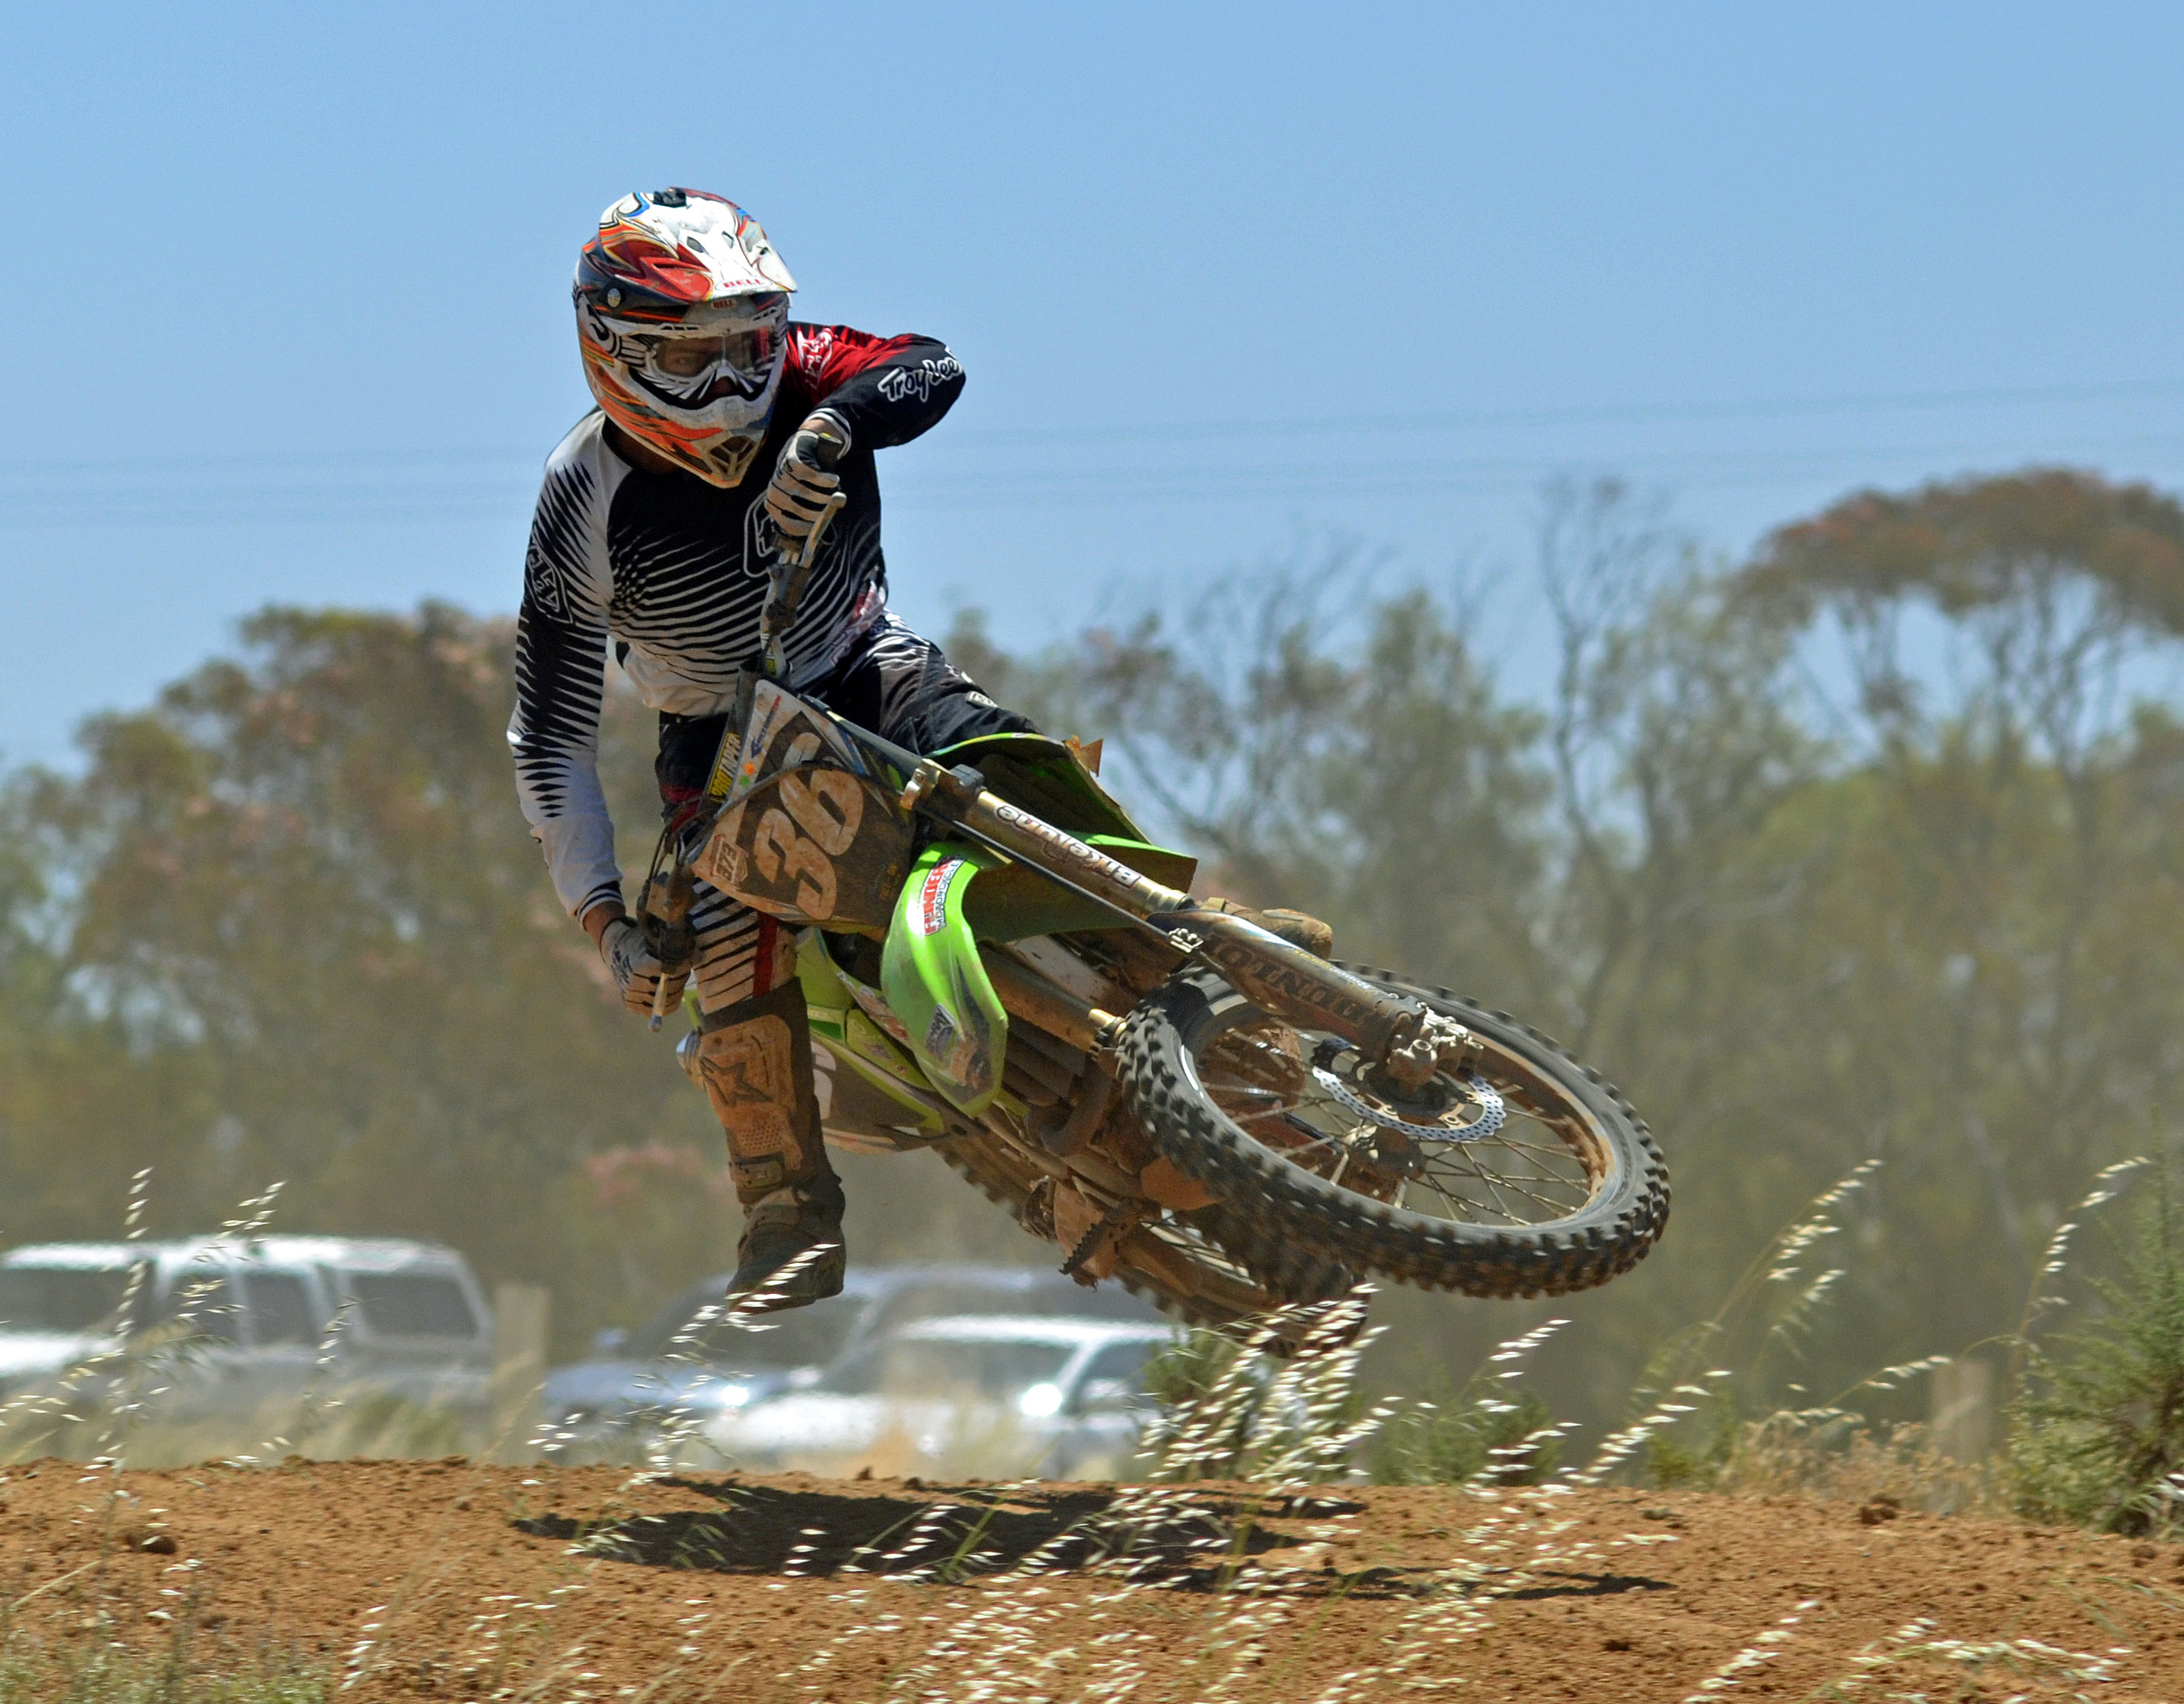 People 2893x2257 motocross south australia vehicle dirt